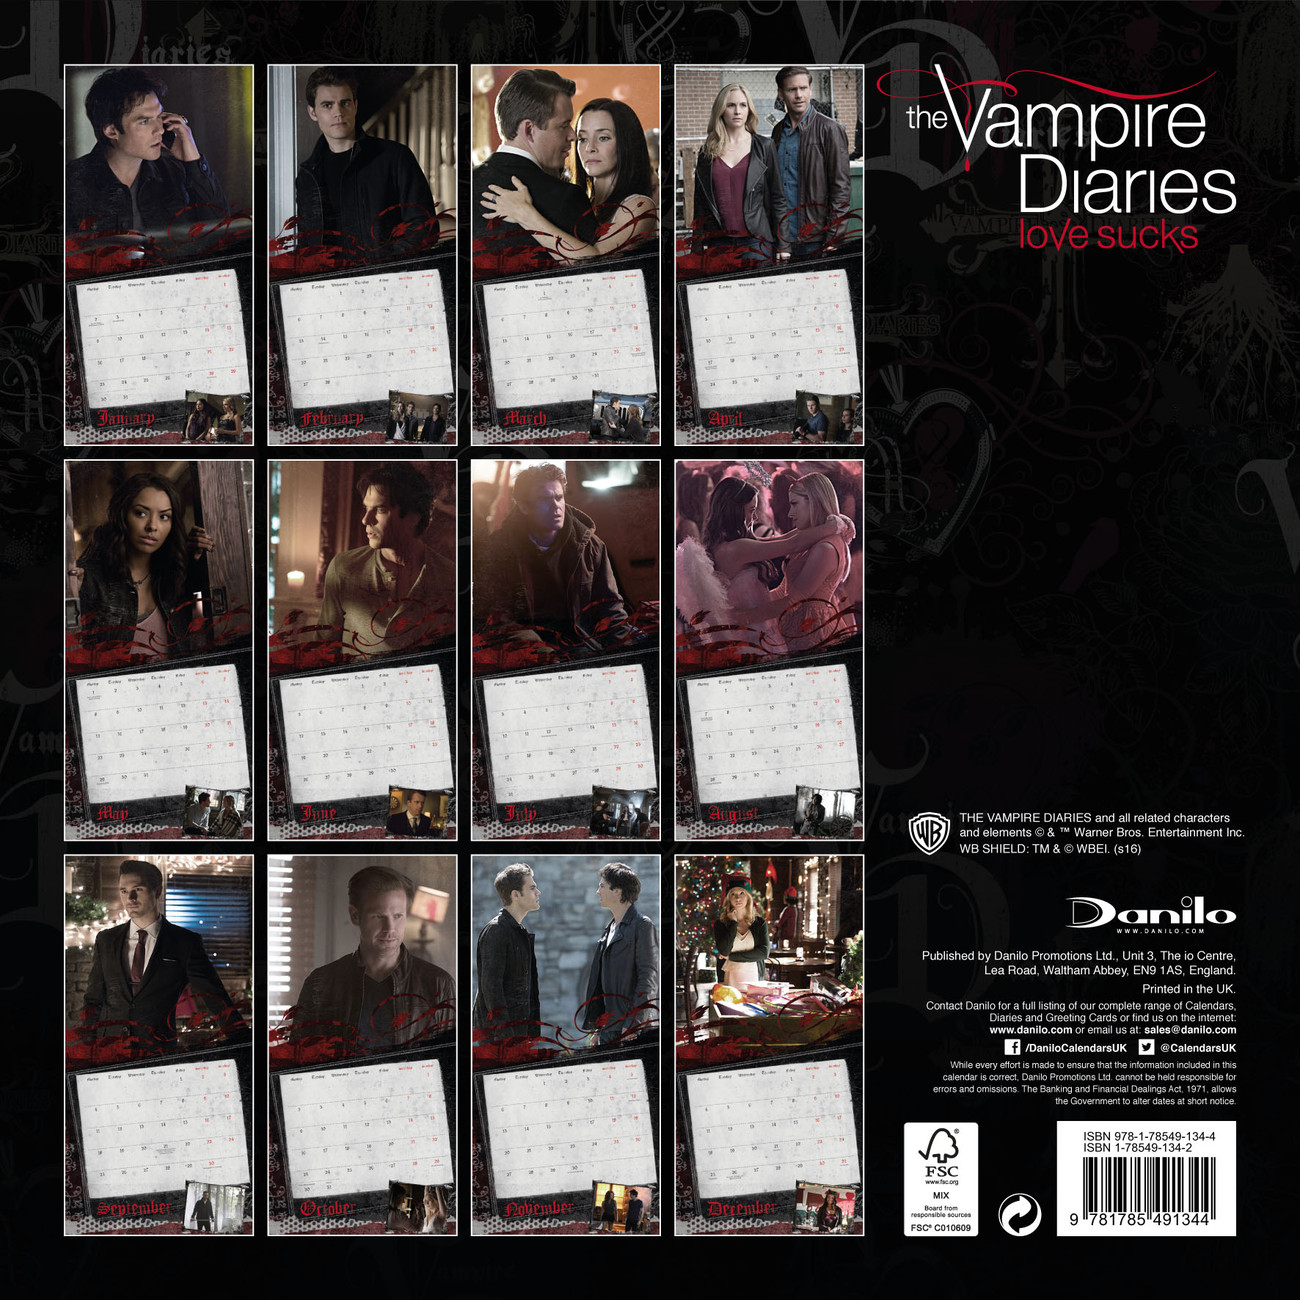 Vampire diaries - Wall Calendars 2017 | Buy at Europosters